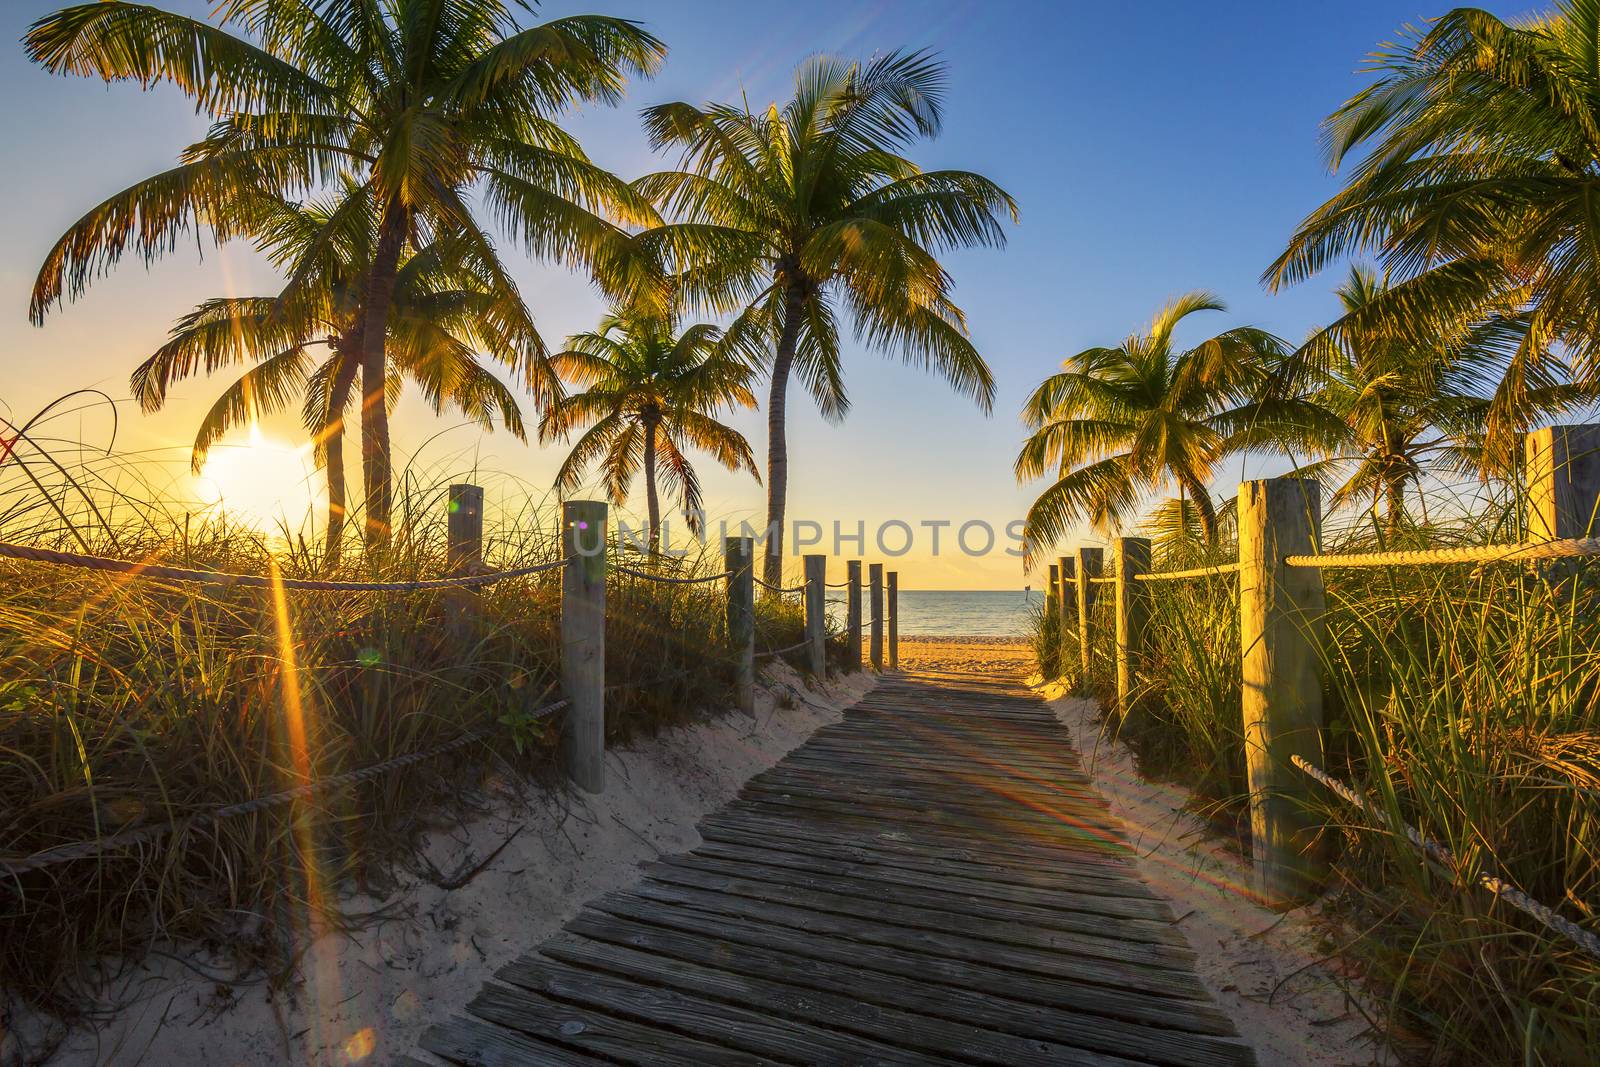 Passage to the beach at sunrise- Key West, USA